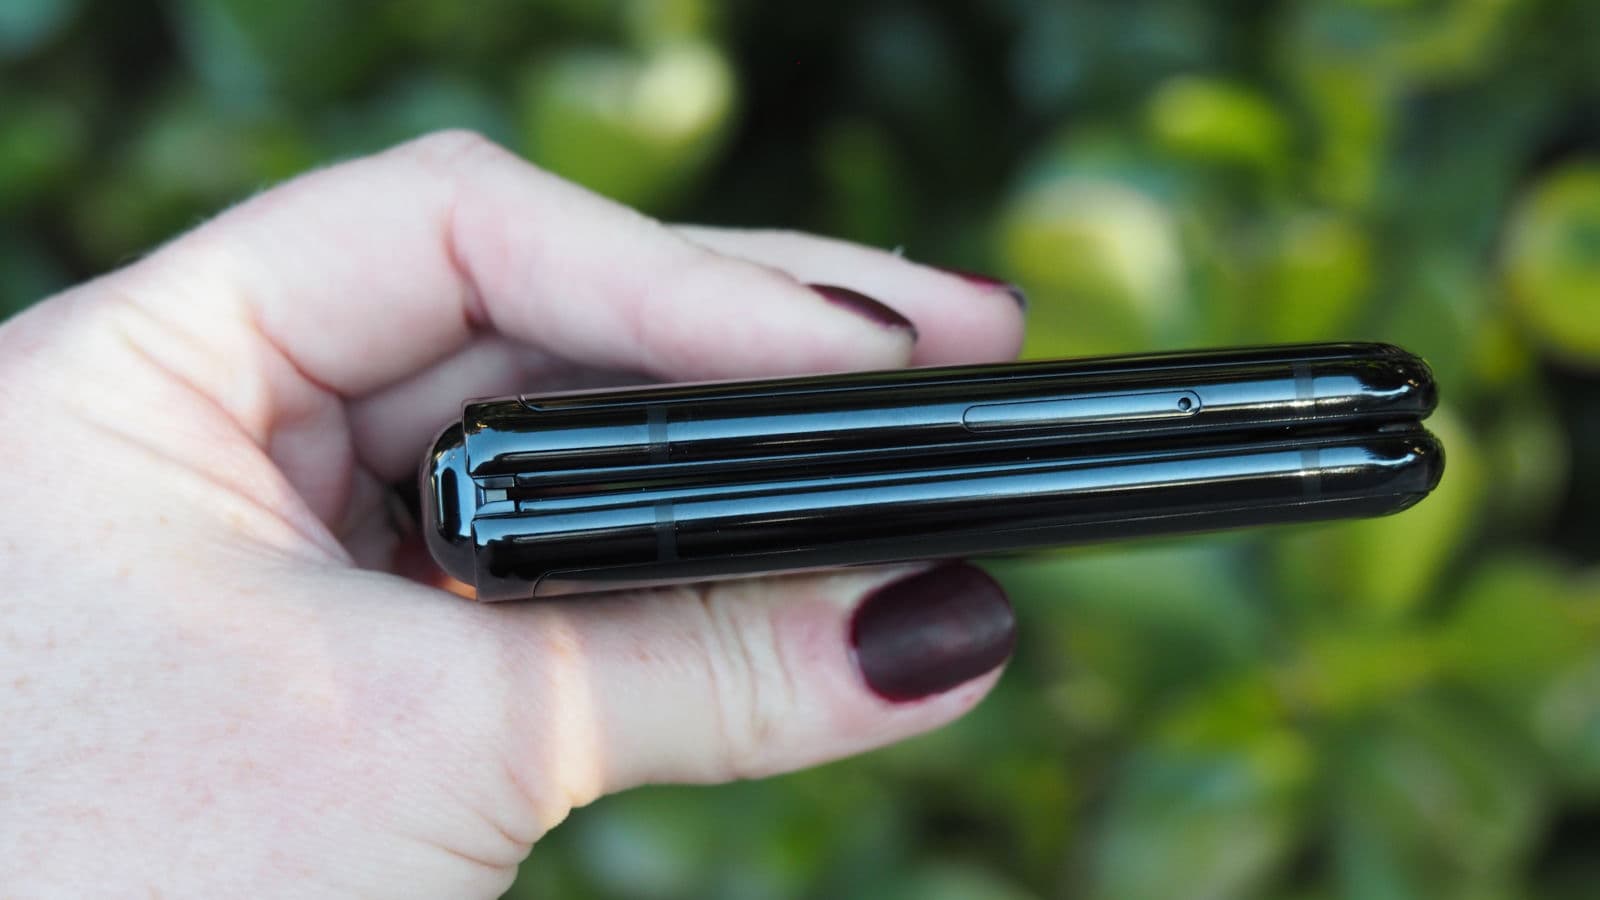 Samsung Galaxy Z Flip completamente dobrado